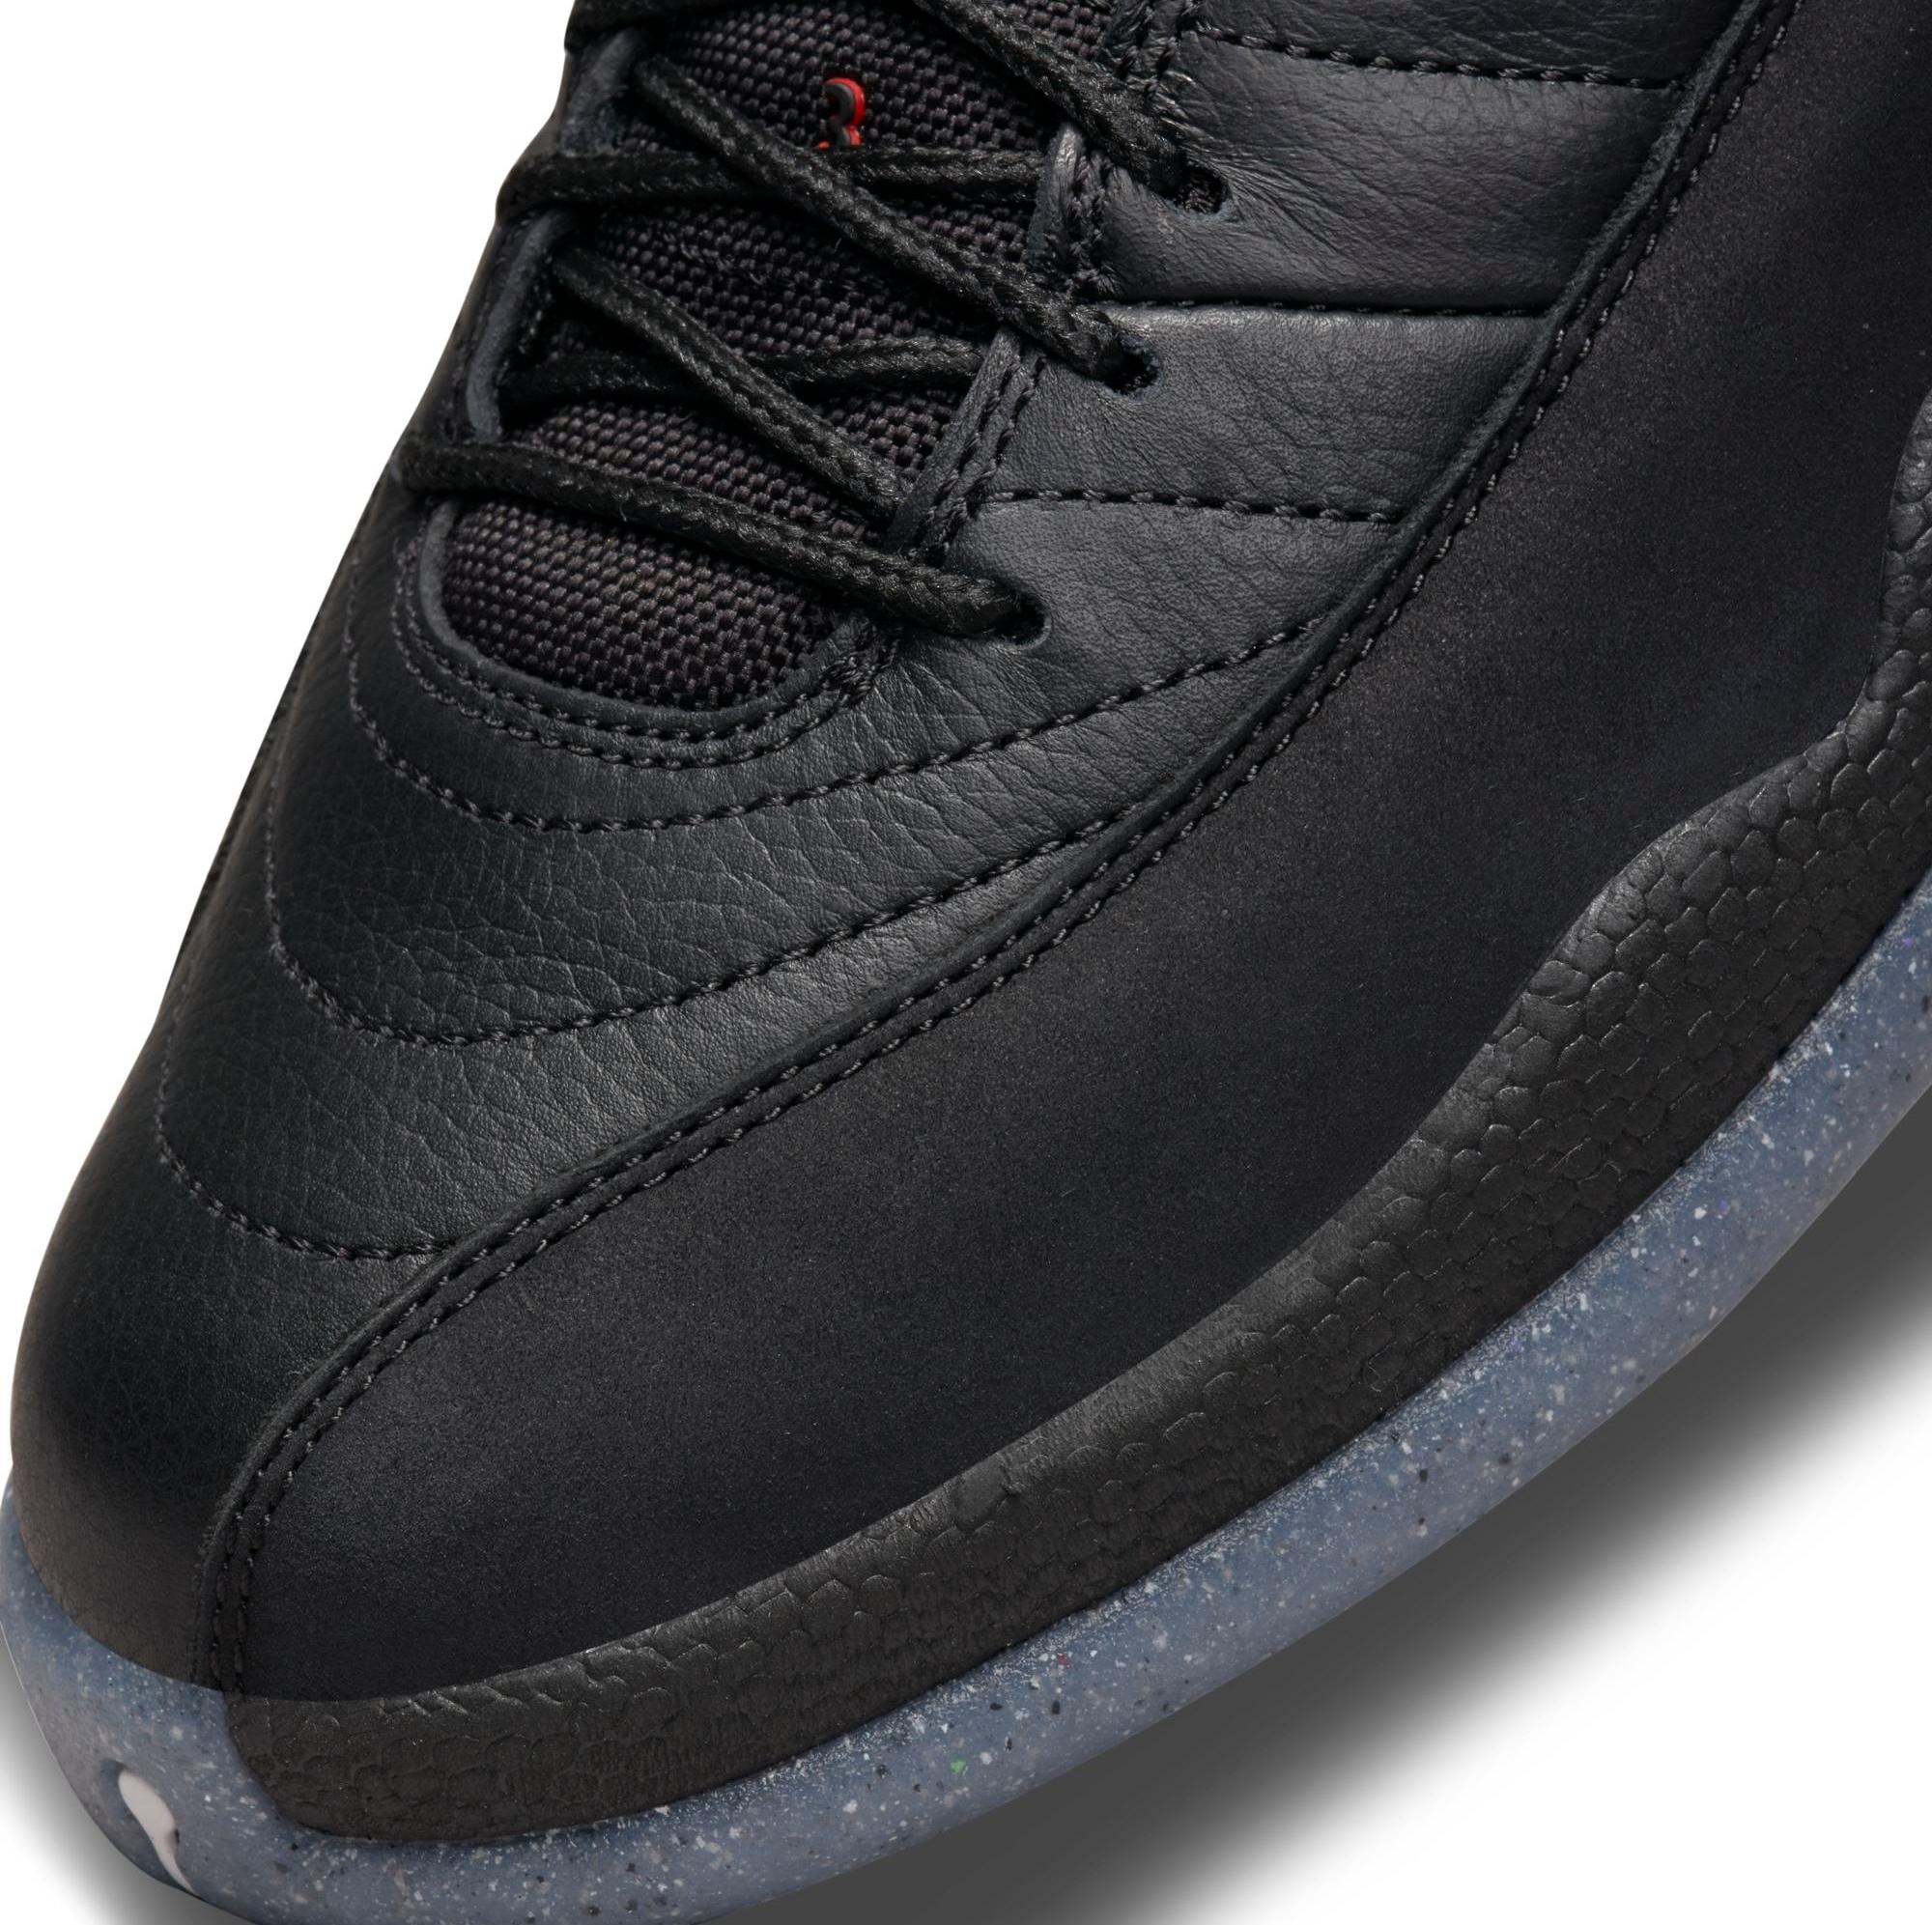 Sneakers Release – Jordan 12 Retro “Utility” Black/Bright Crimson 